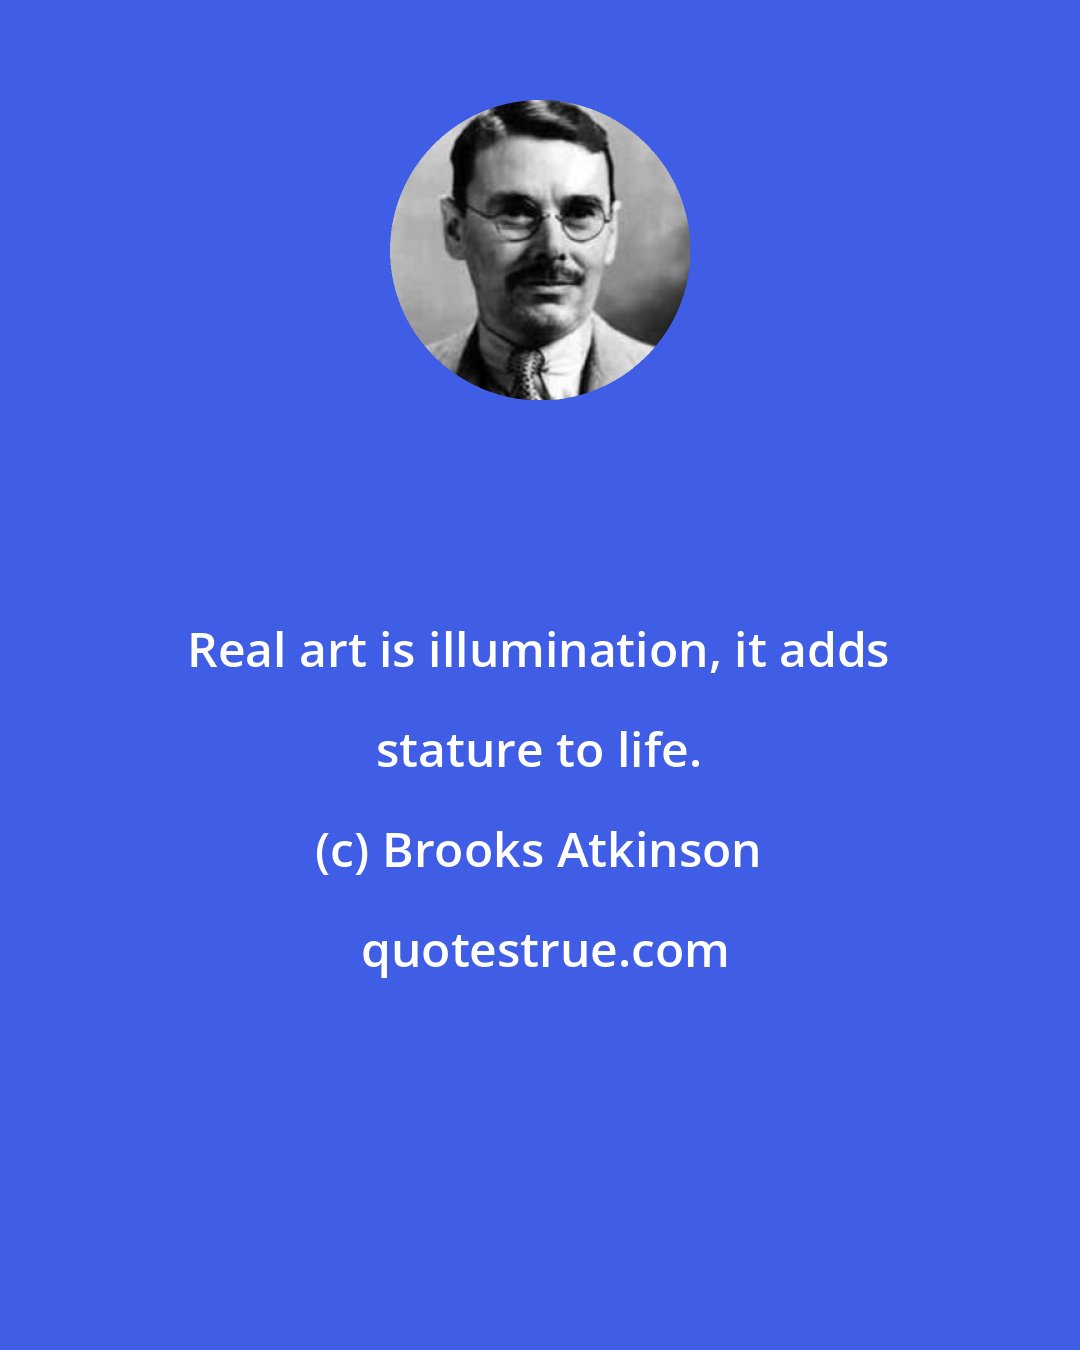 Brooks Atkinson: Real art is illumination, it adds stature to life.